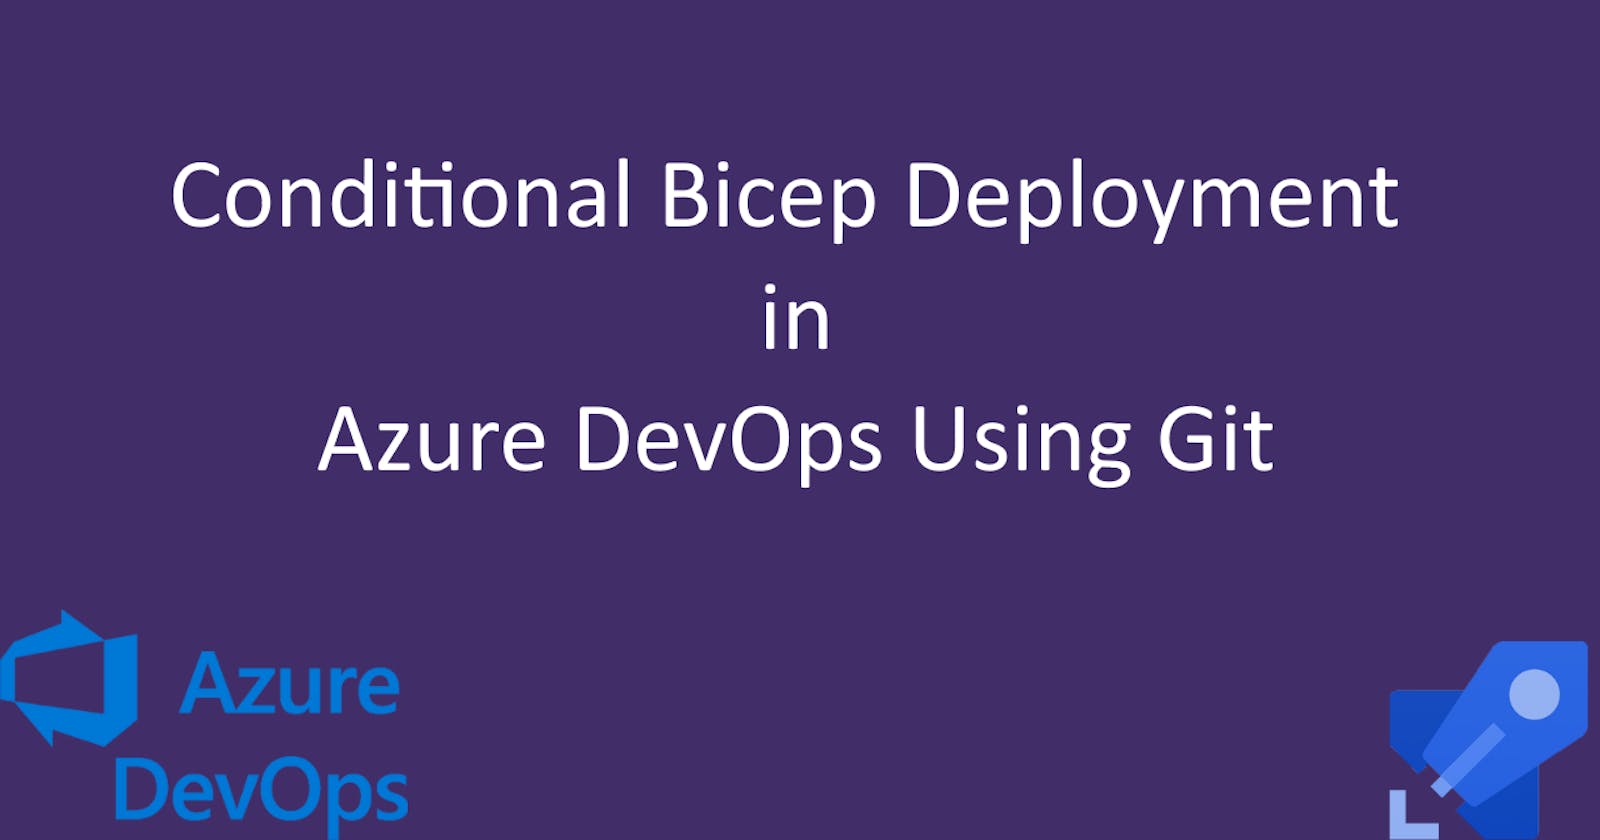 Conditional Bicep Deployment in Azure DevOps Using Git